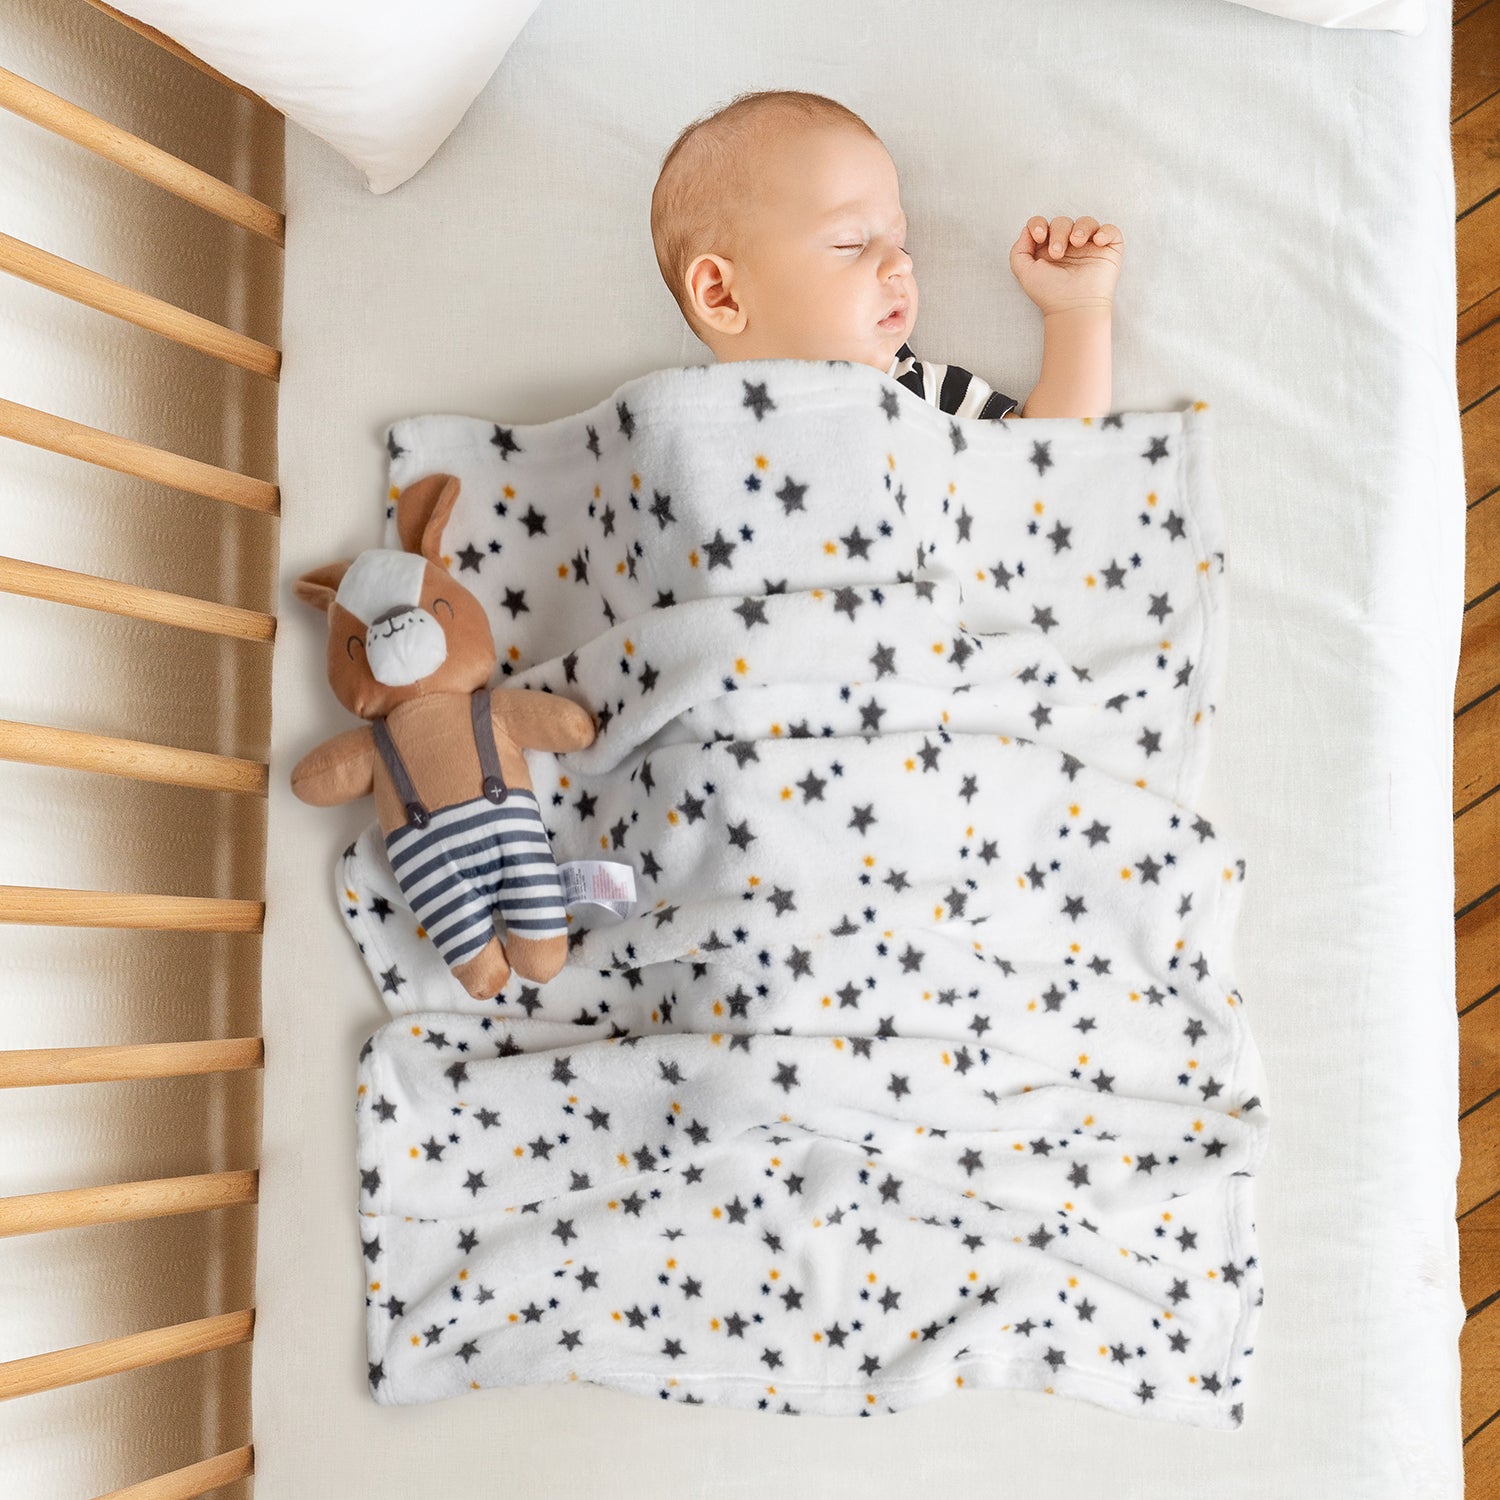 Baby Moo Dog Snuggle Buddy Soft Rattle and Plush Blanket Gift Toy Blanket - White